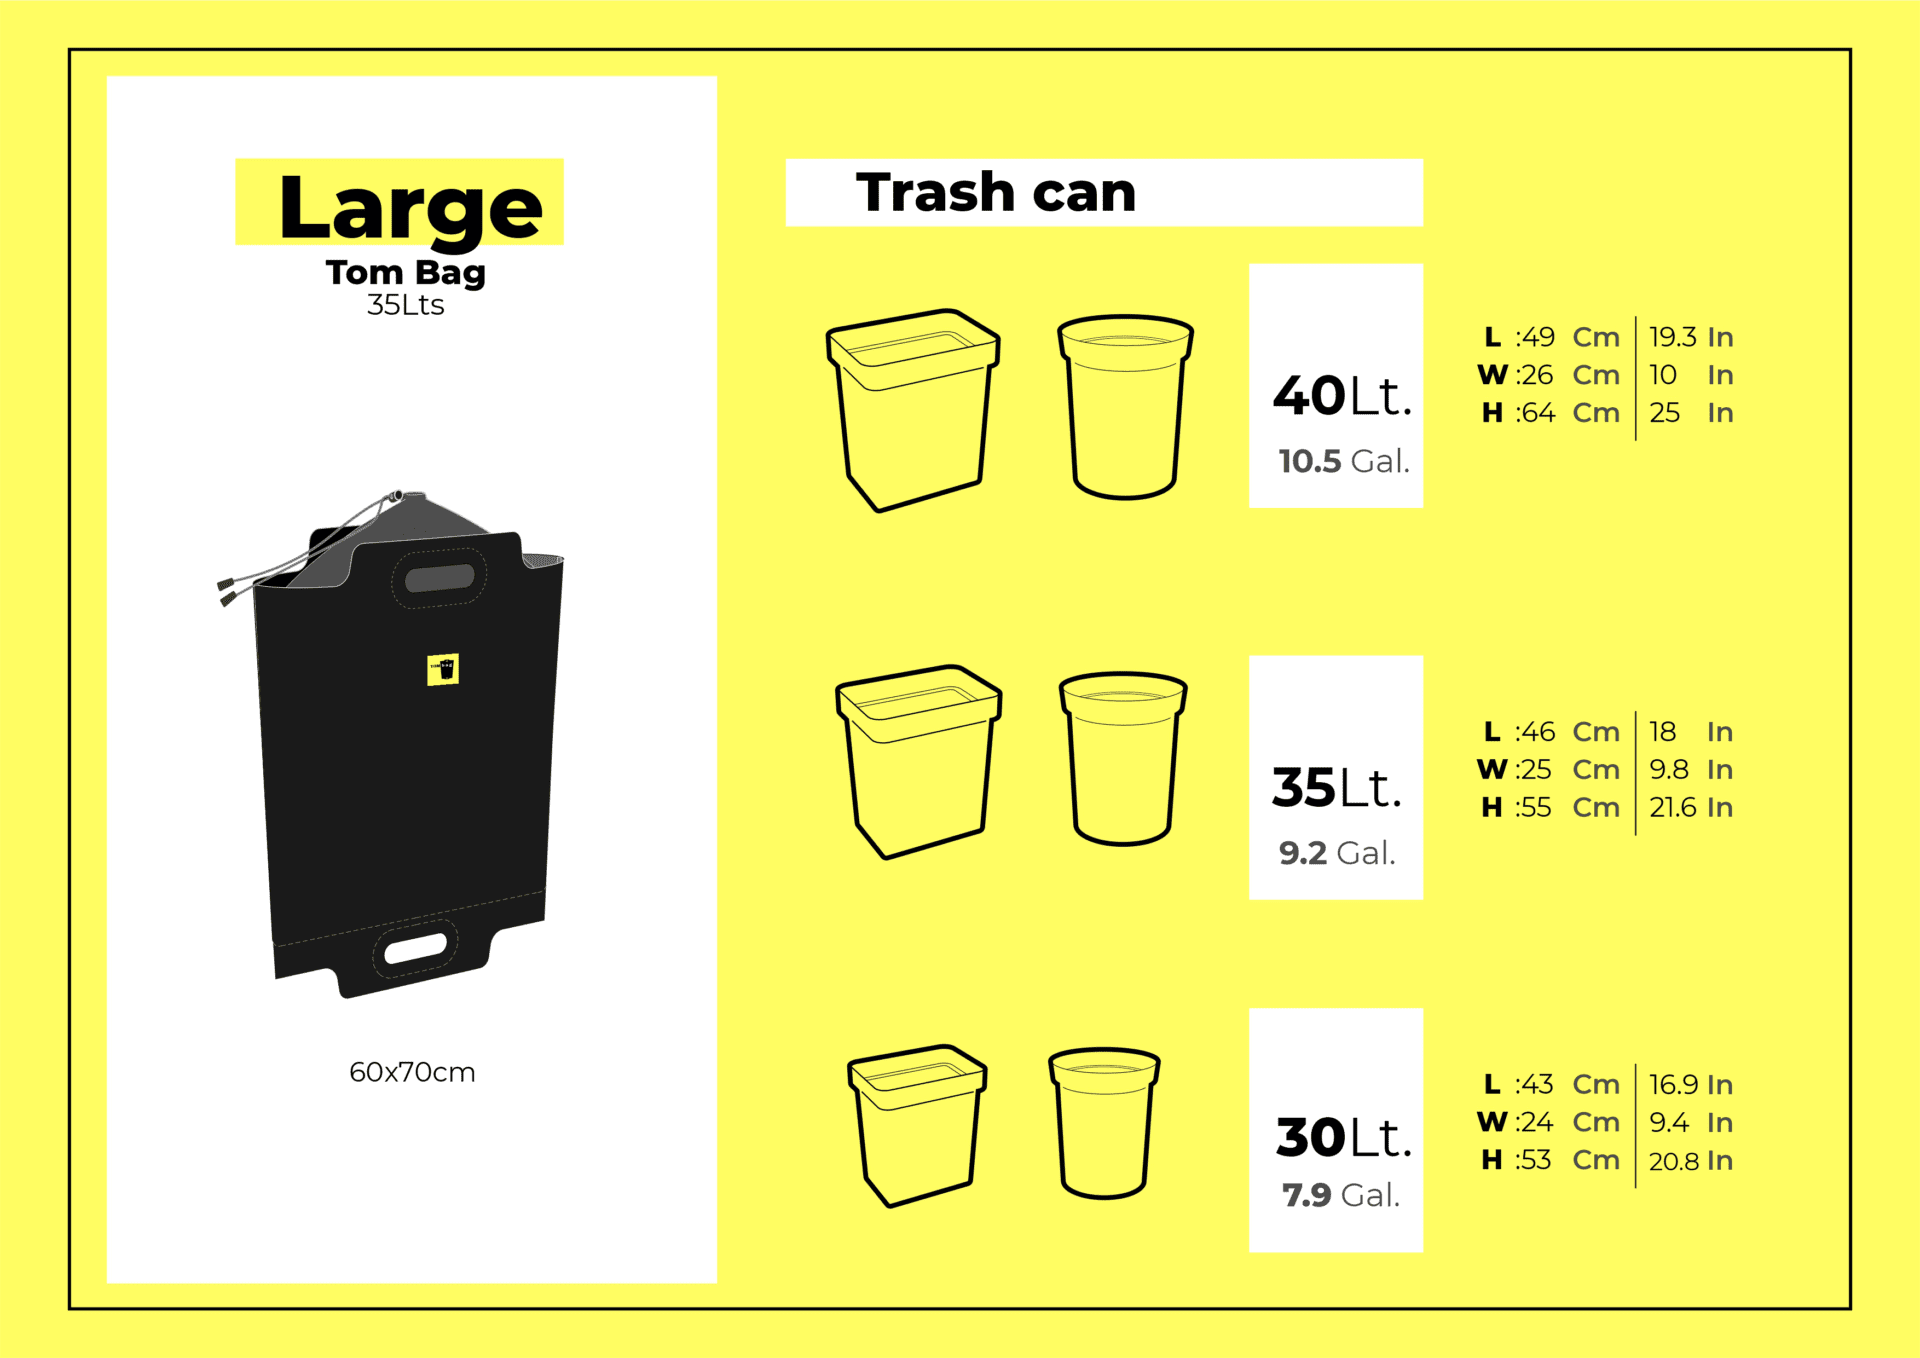 TOMbag Reusable Garbage Bag